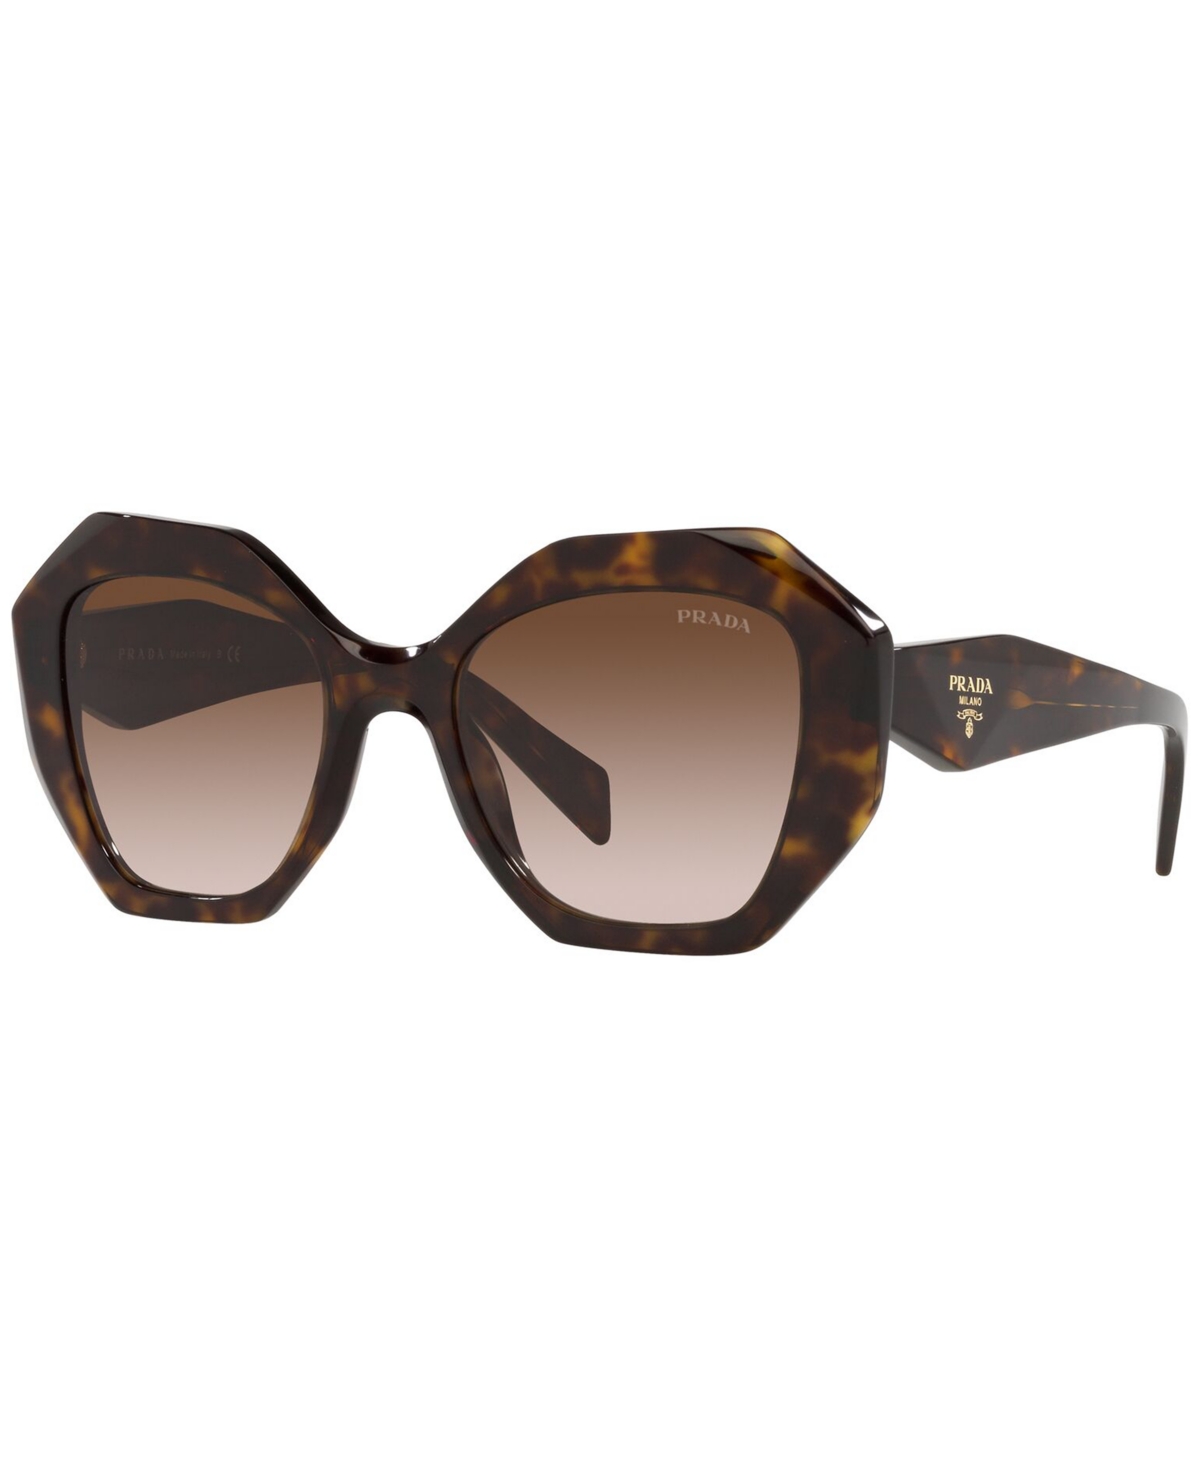 Women's Sunglasses, Pr 16WS - TORTOISE/BROWN GRADIENT